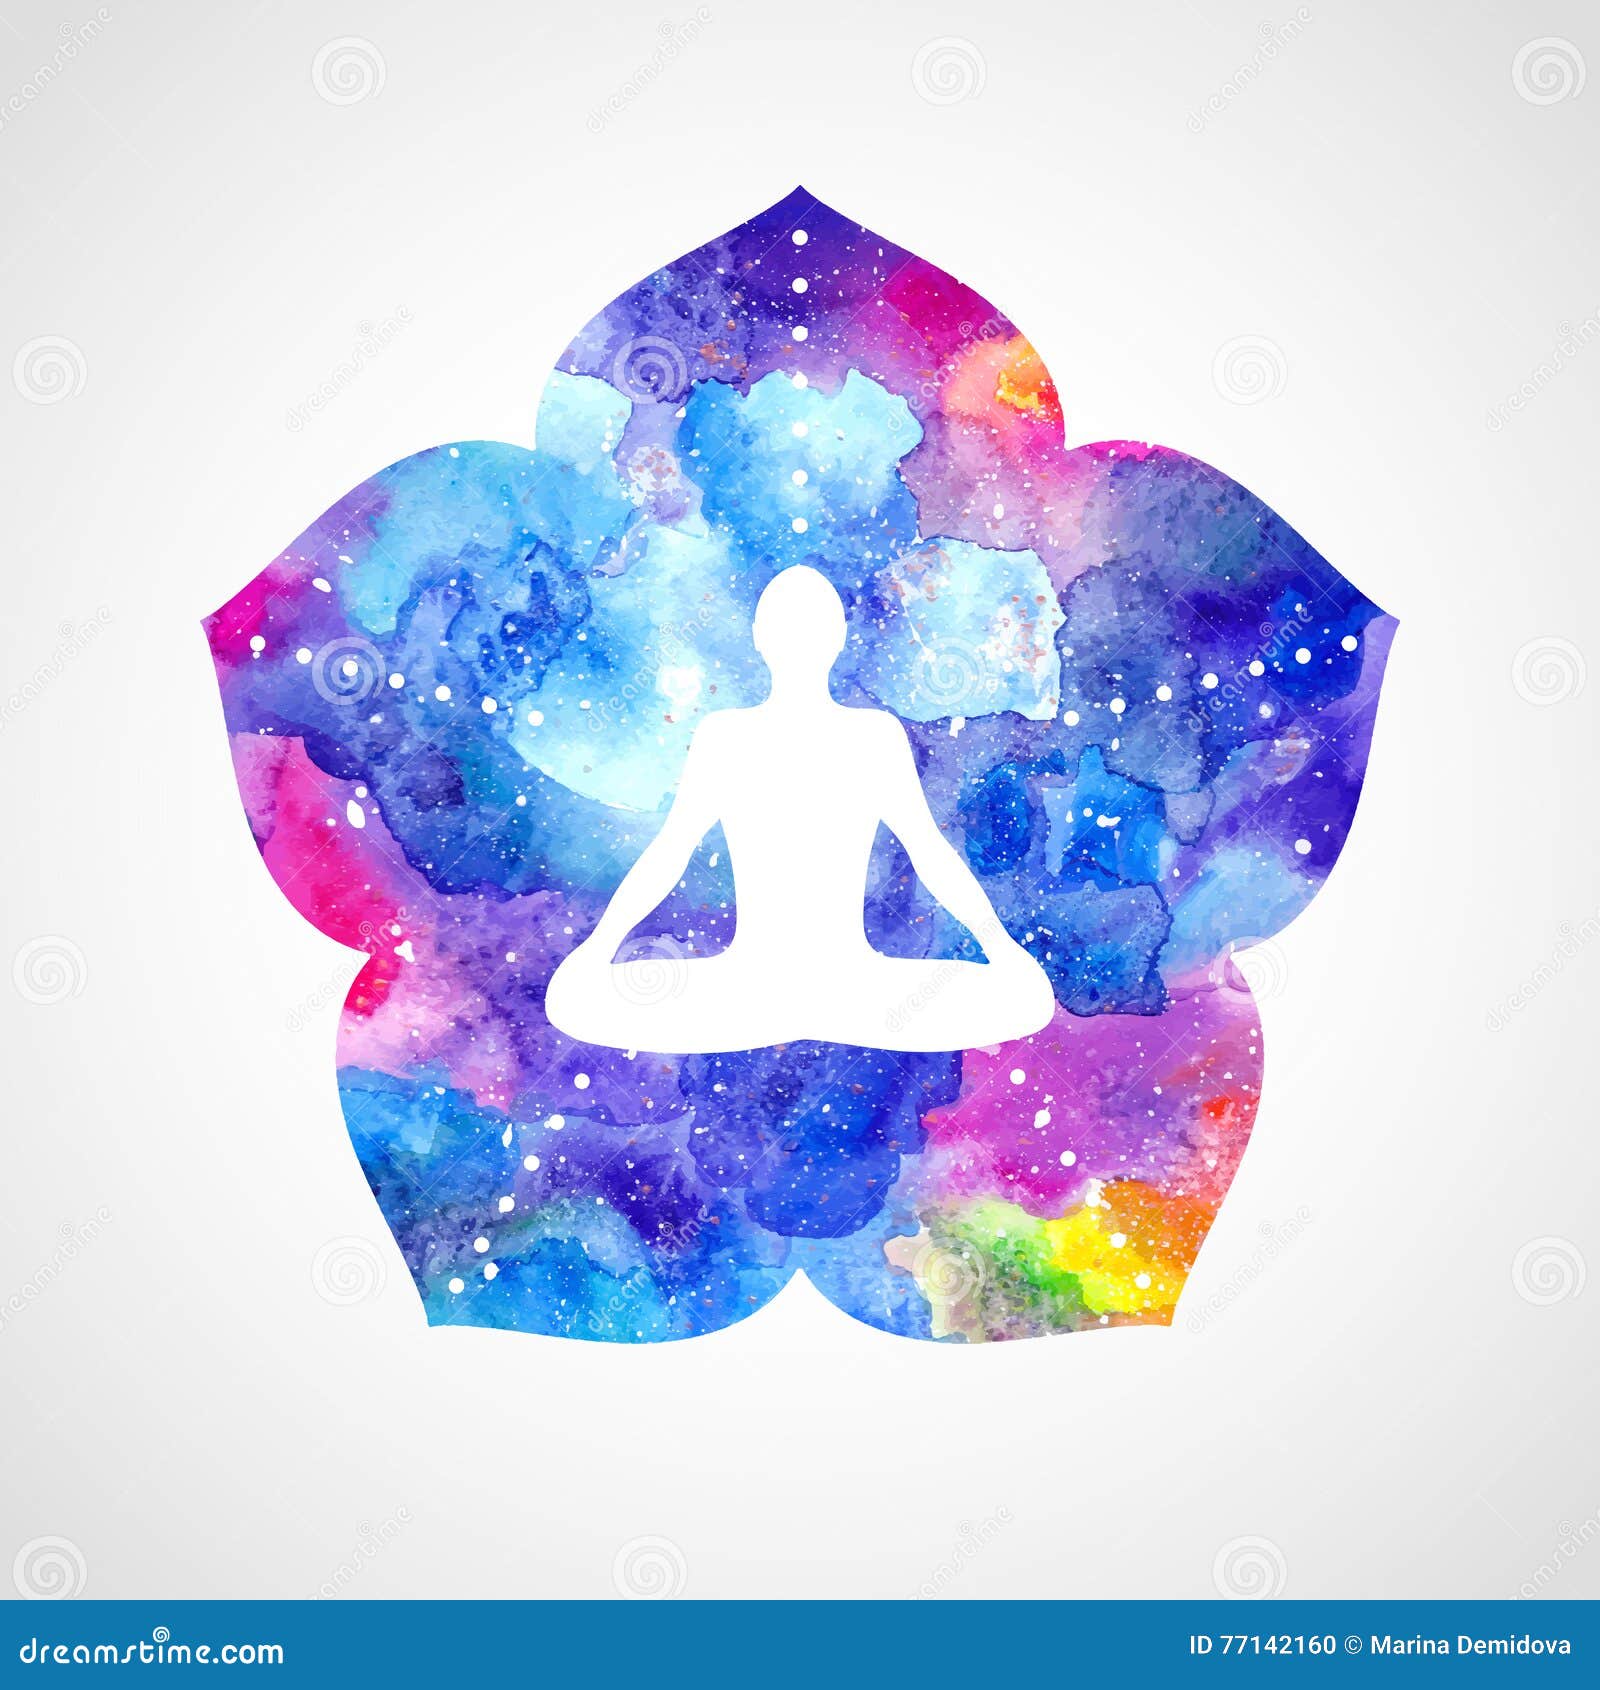 Wallpaper girl vector art yoga asana Meditation images for desktop  section минимализм  download